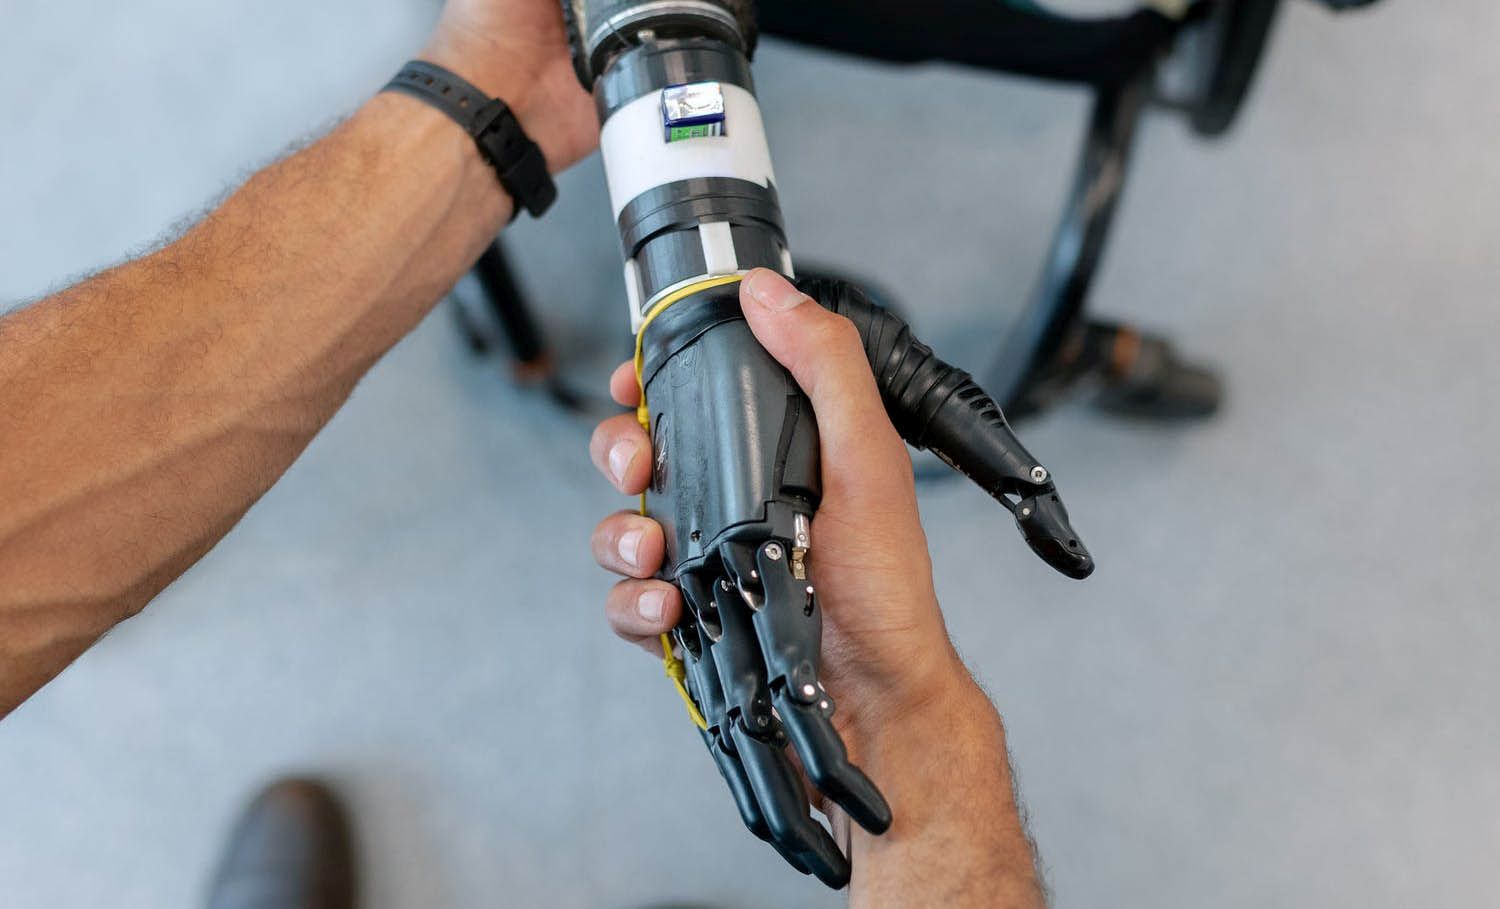 Controlling robotic arm